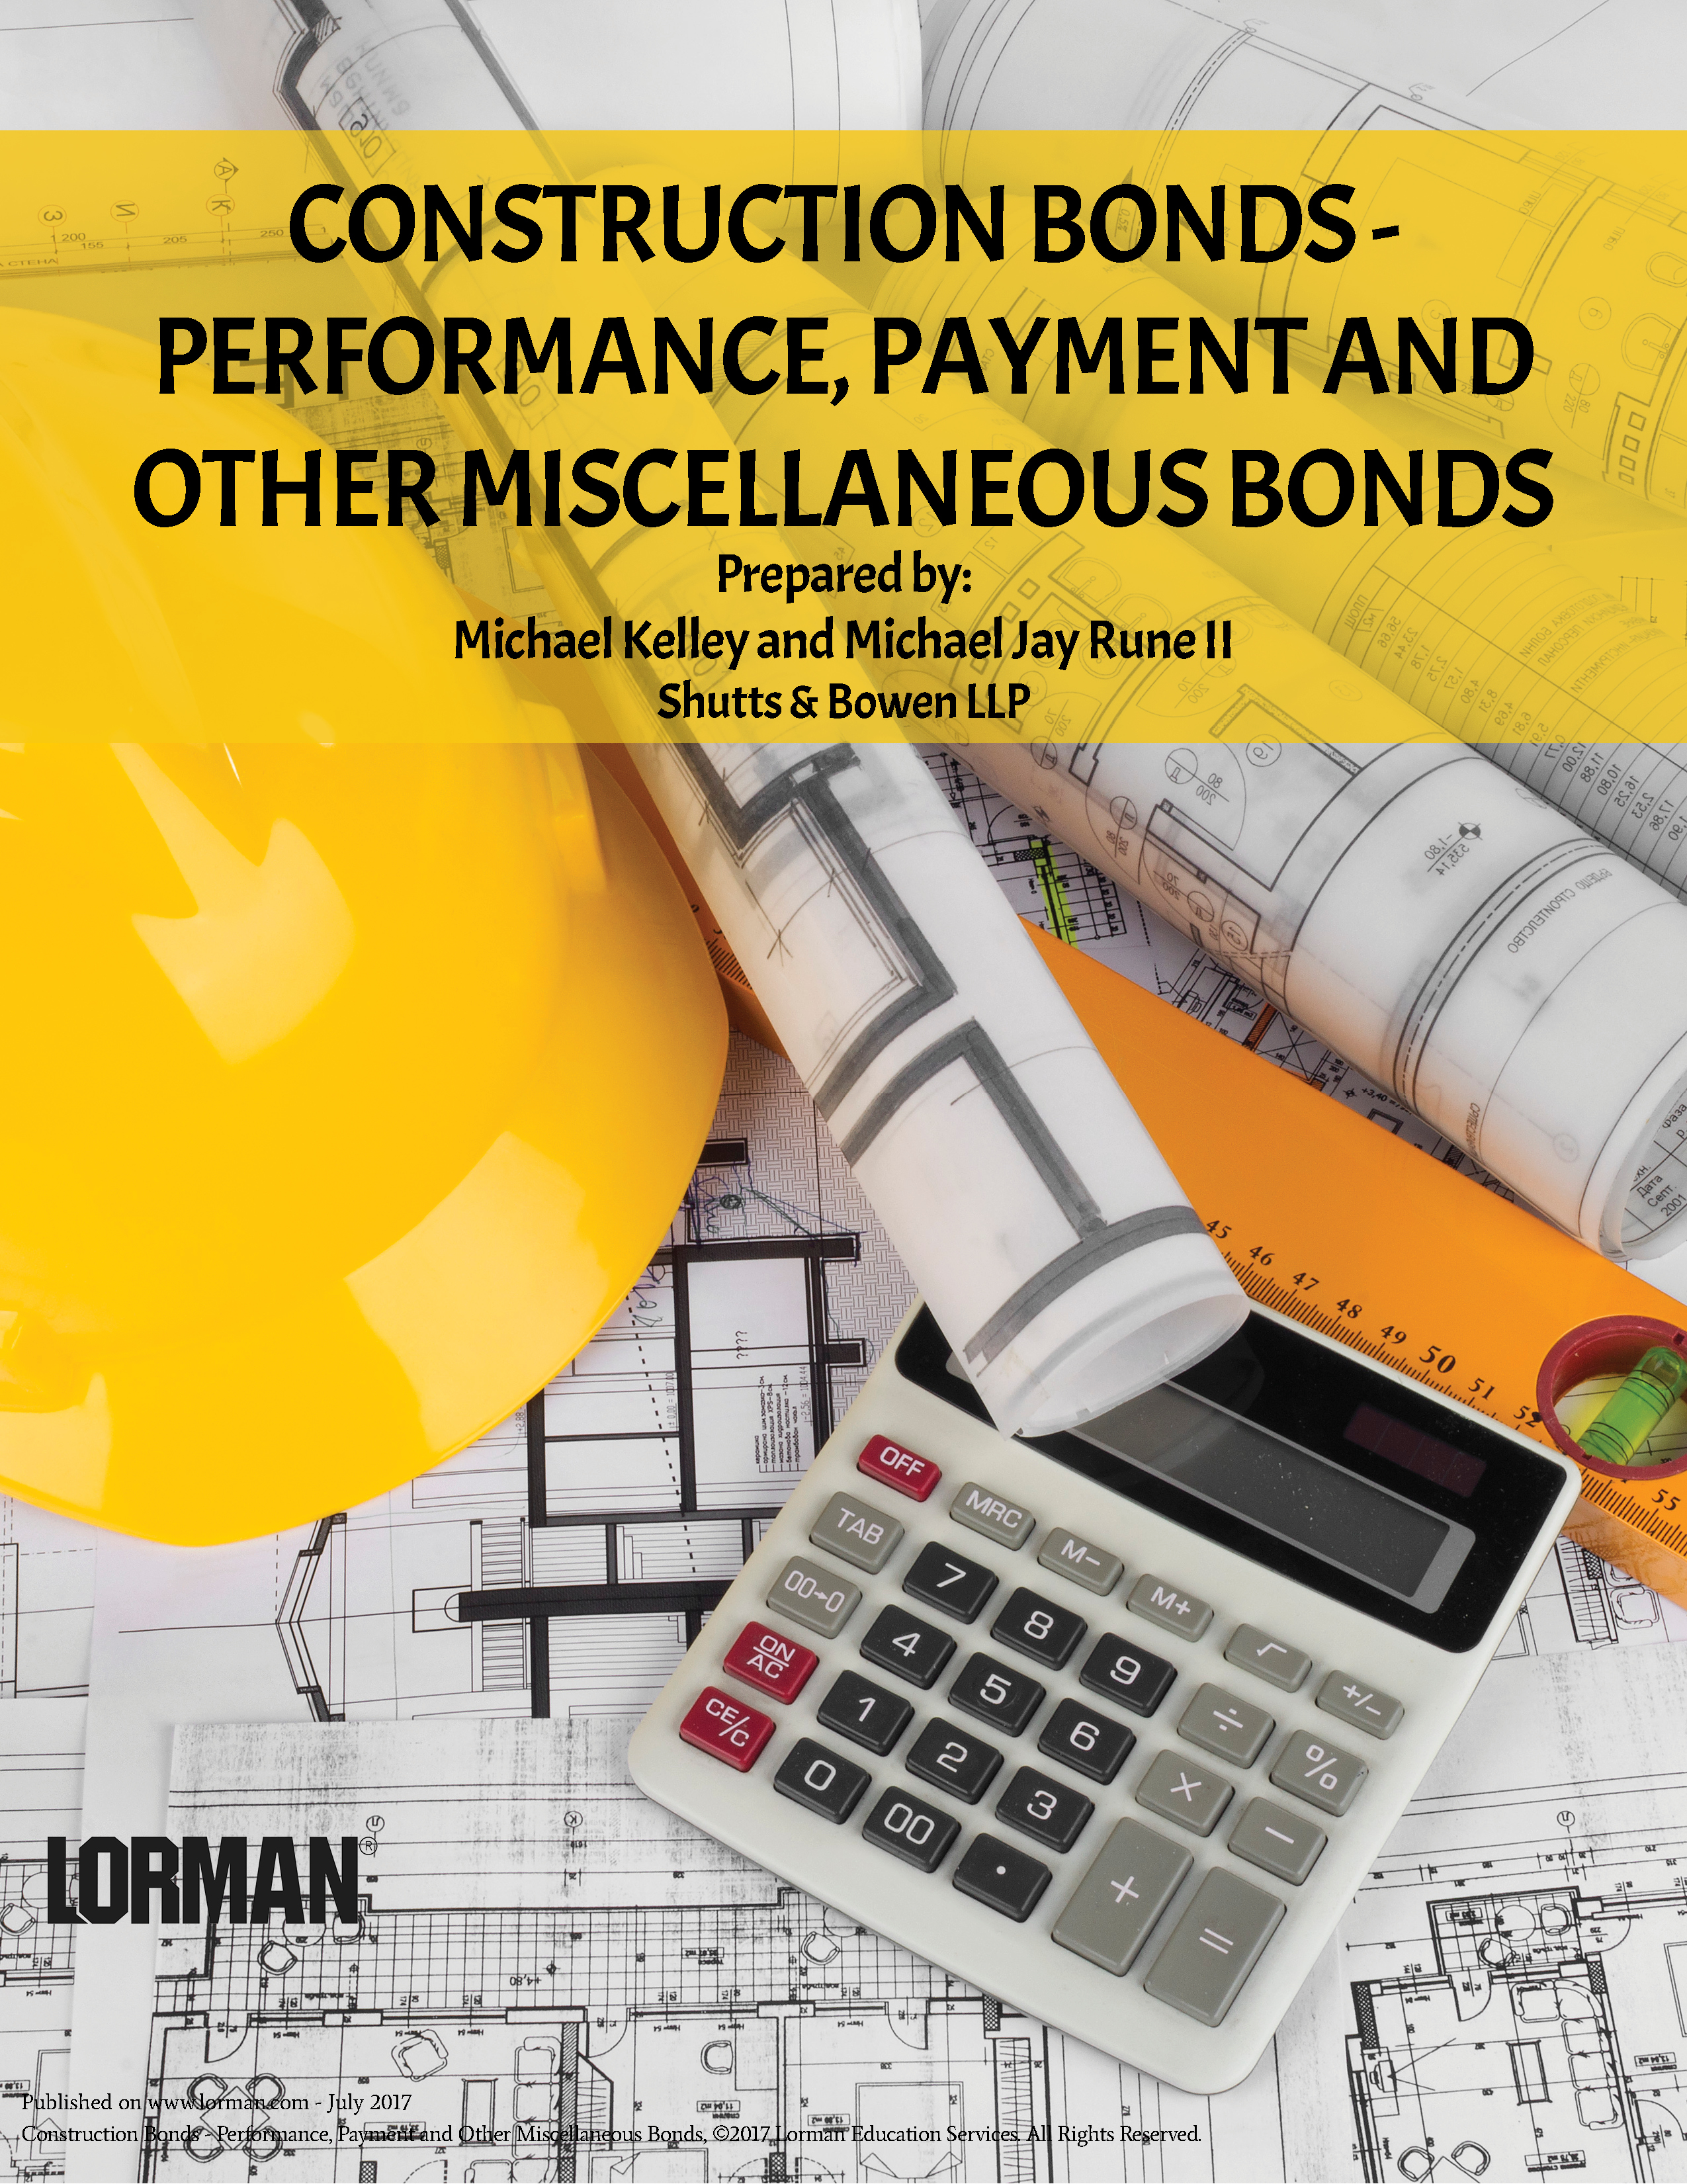 Construction Bonds - Performance, Payment and Other Miscellaneous Bonds